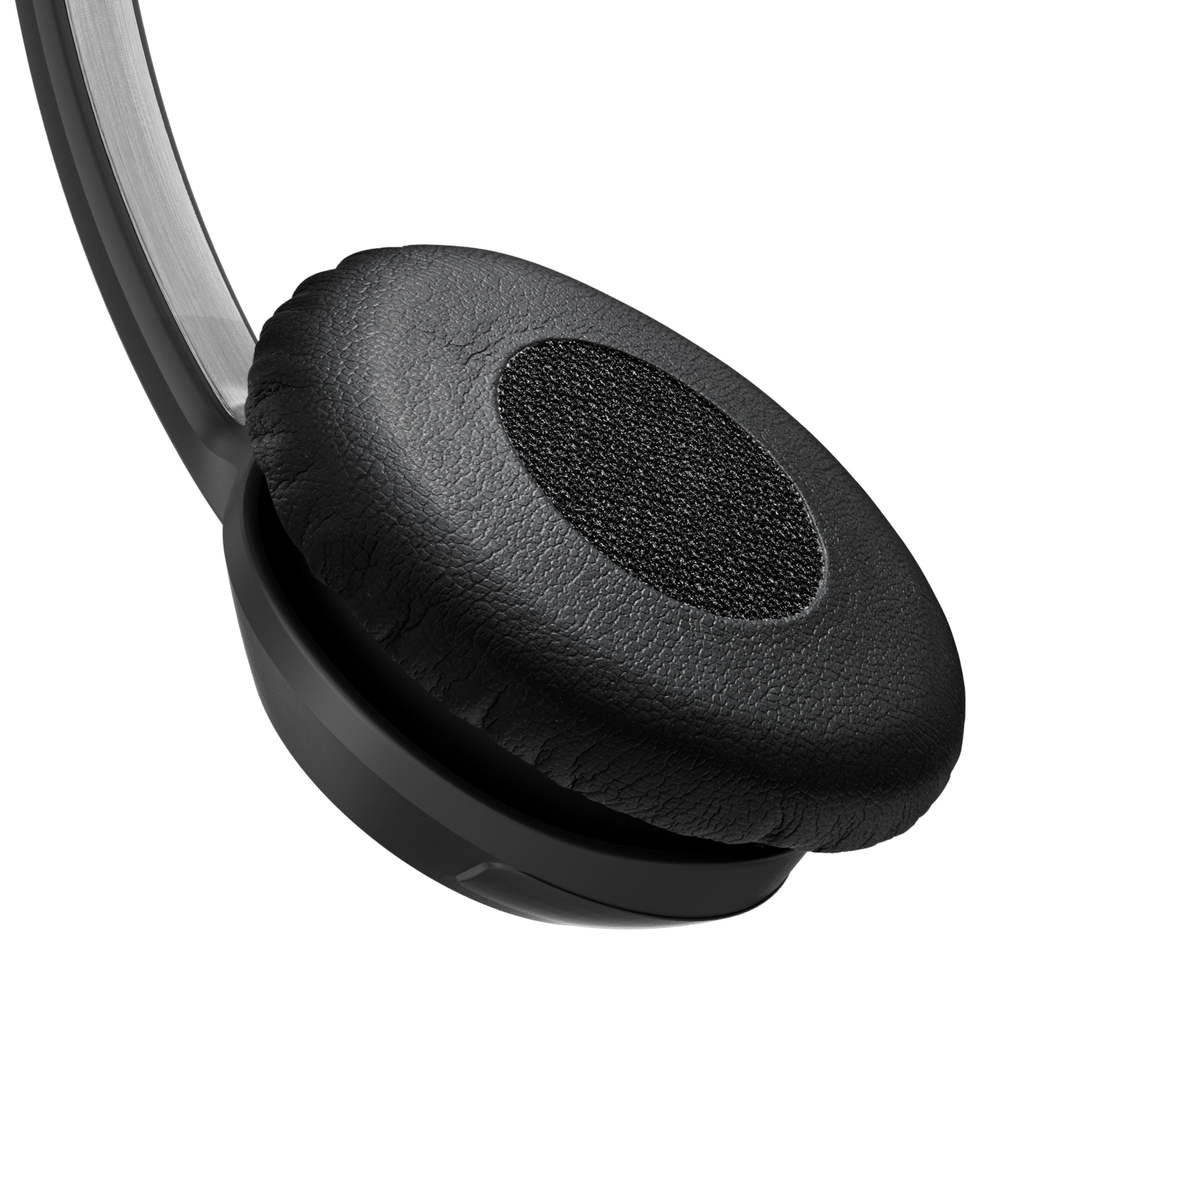 EPOS Sennheiser MS, Impact Headset Schwarz SC On-ear USB 260